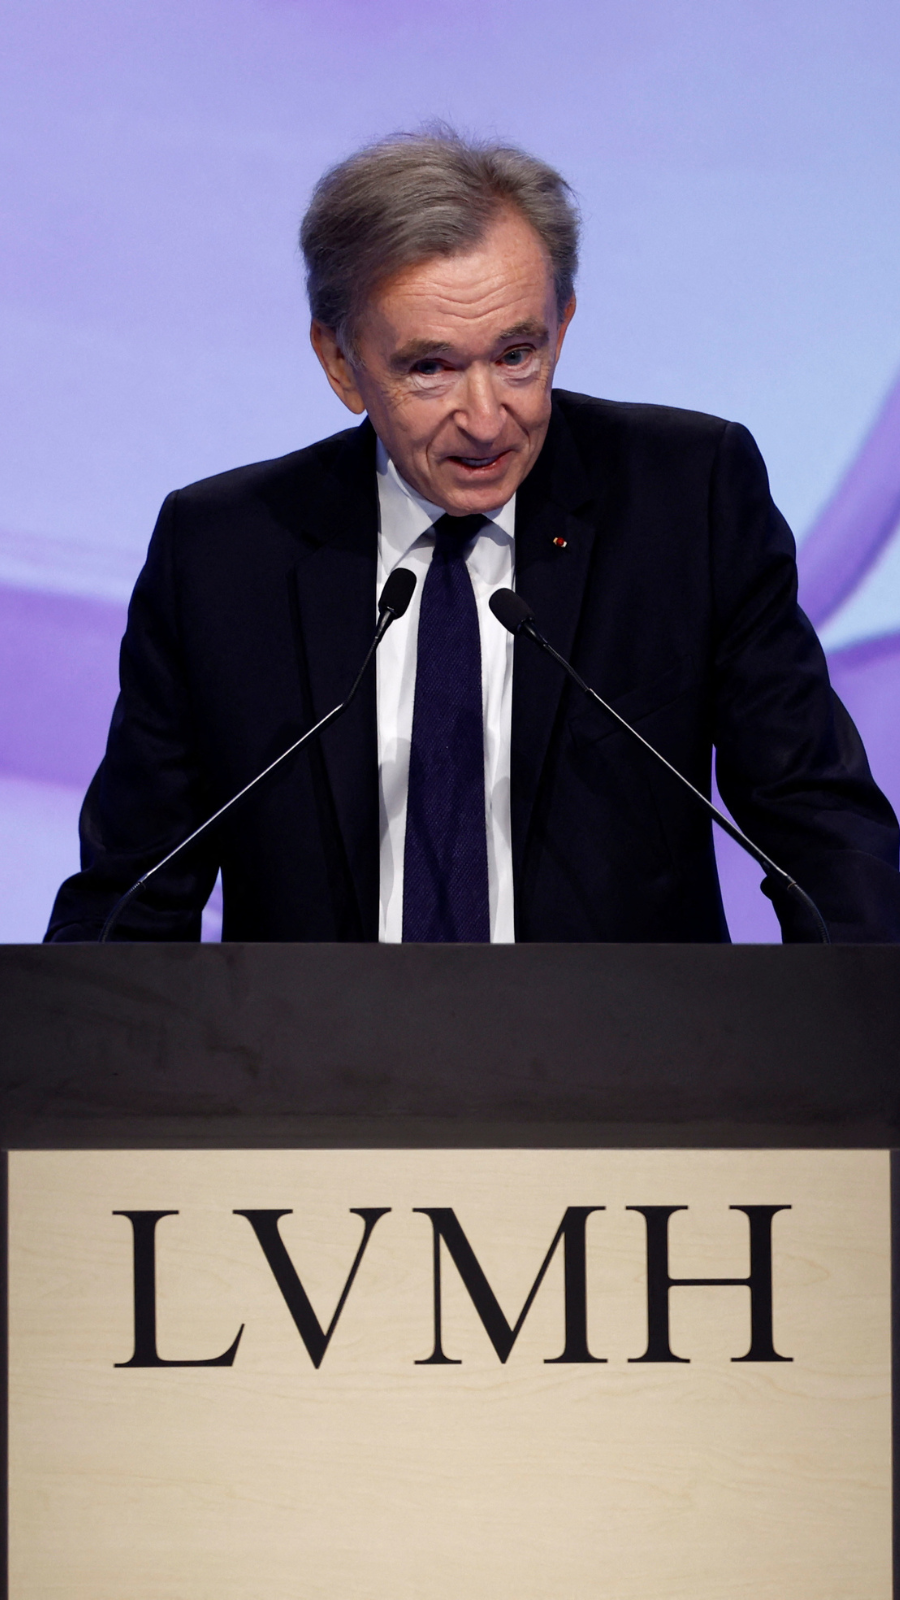 Real 'Succession' story of Bernard Arnault, world's richest